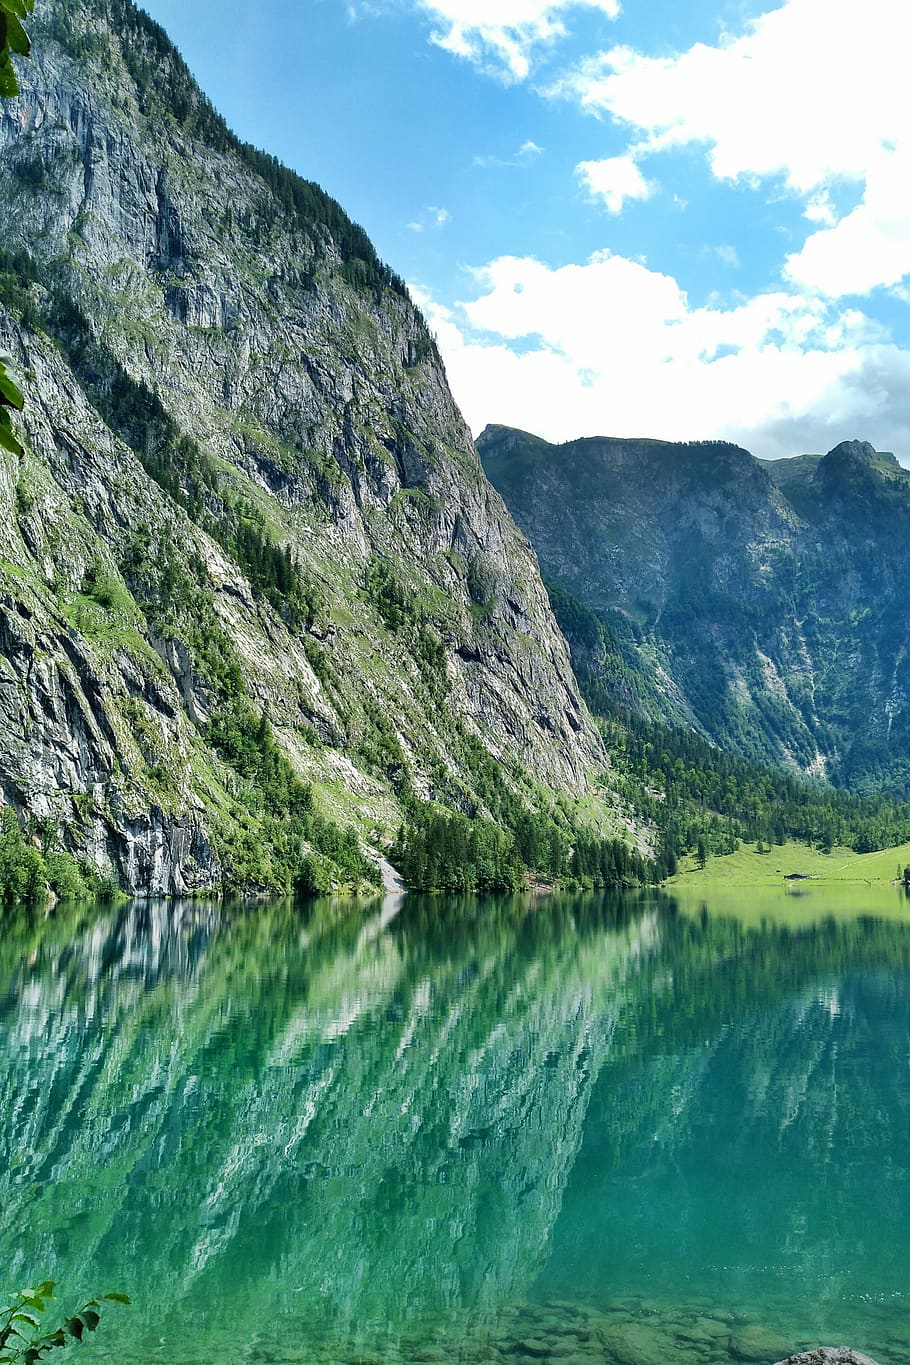 danau atas, fischunkelalm, königssee, berchtesgaden, alpine, bavaria atas, danau, langit, awan, mirroring